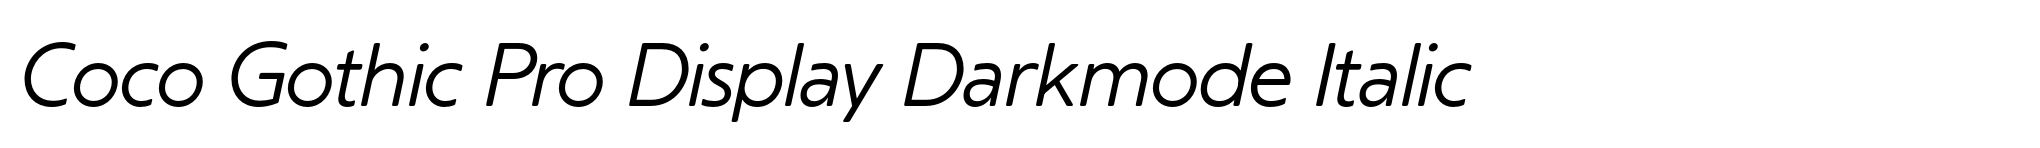 Coco Gothic Pro Display Darkmode Italic image